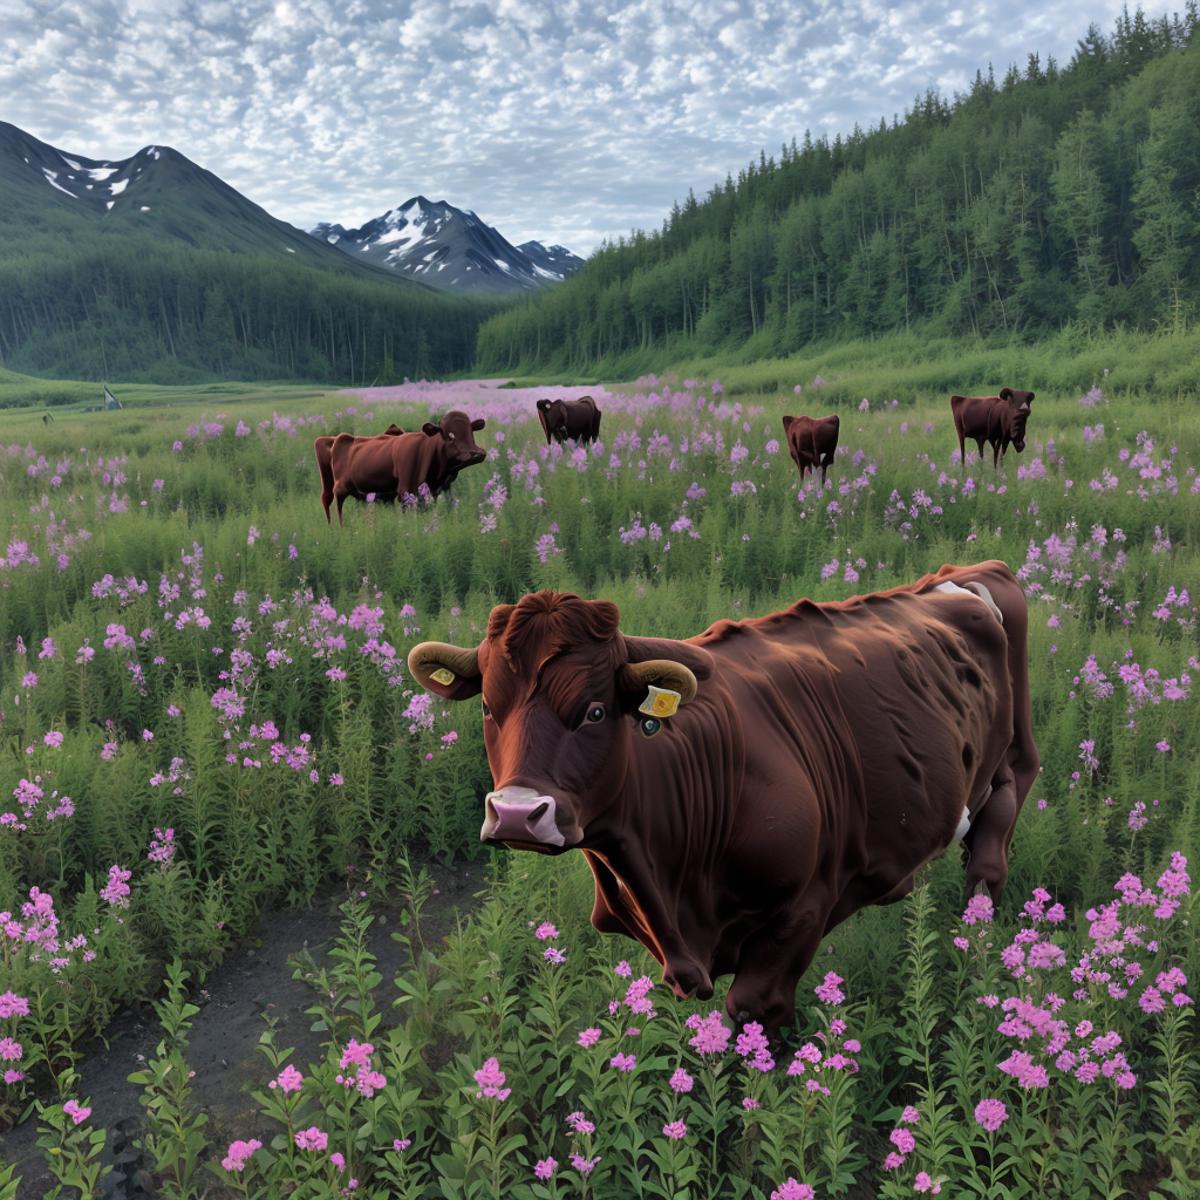 Alaska Fireweed image by Jabberwocky207